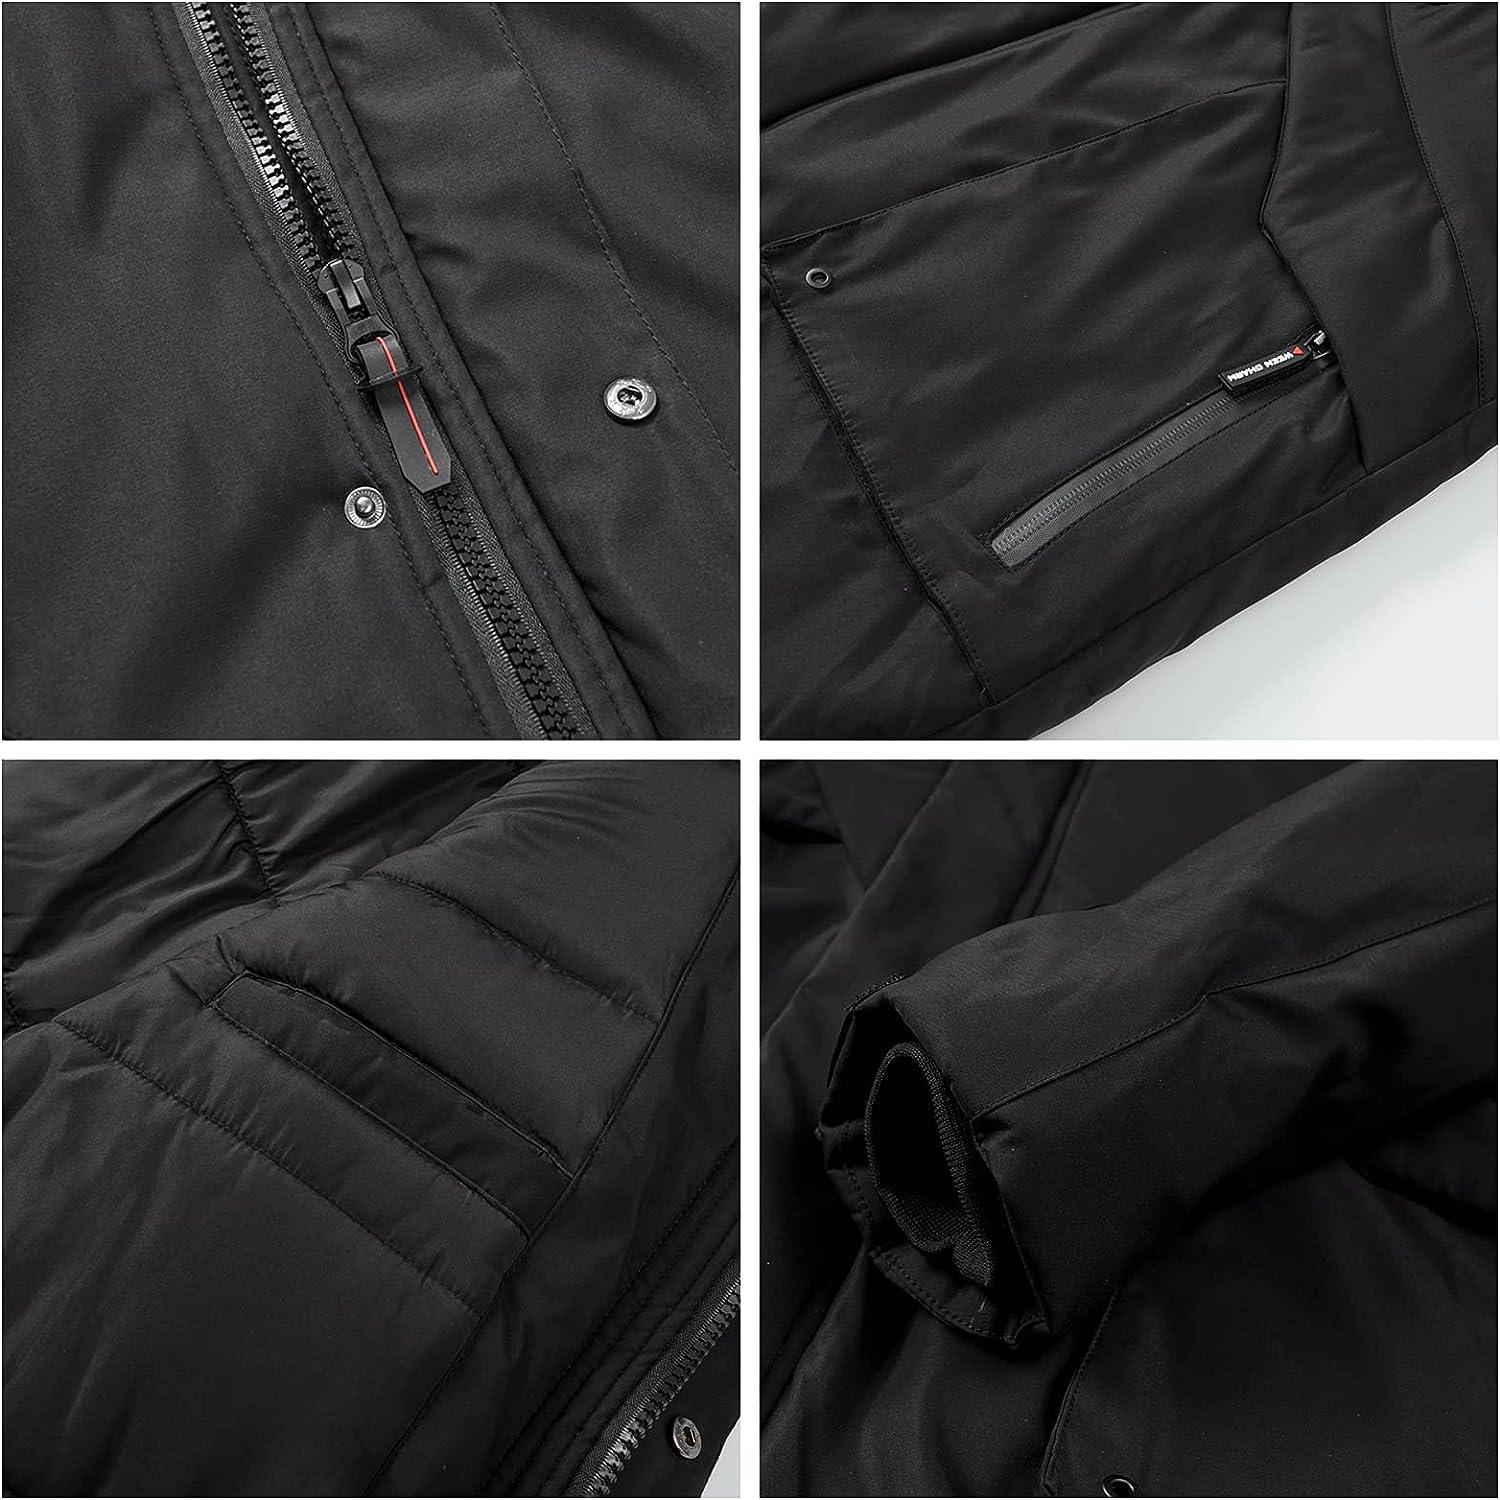 WEEN CHARM Men's Warm Parka Jacket Anorak Jacket Winter Coat with  Detachable Hood Faux-Fur Trim